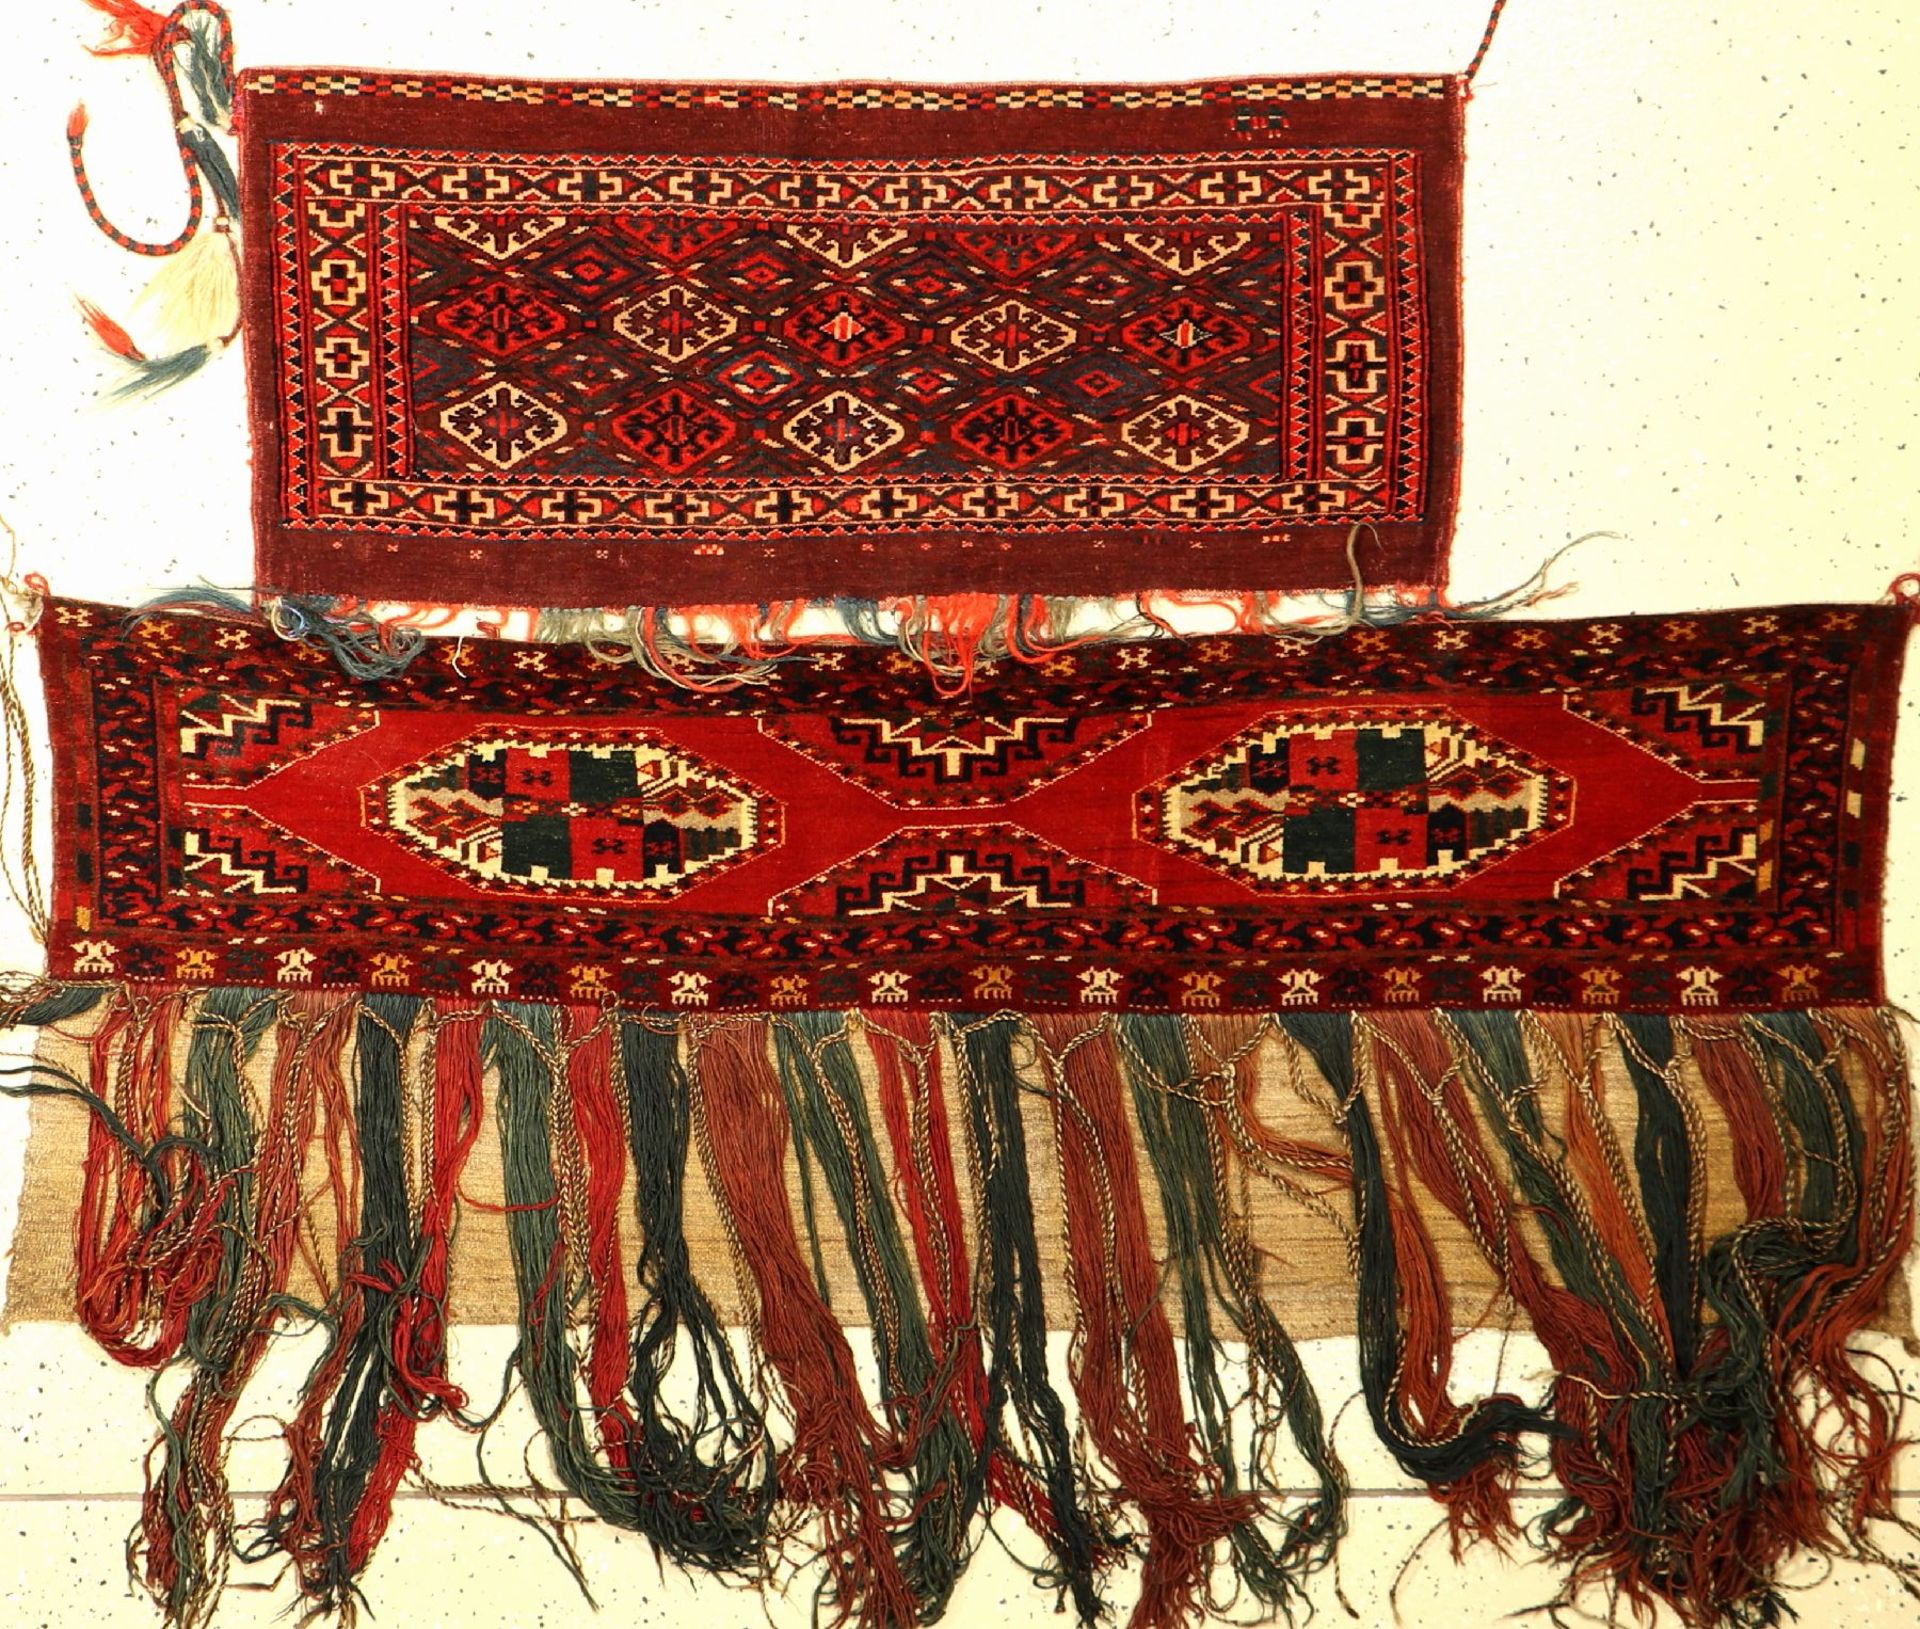 (2 Lots) 1x Ersari Jollar 1x Yomud Torba alt/antik, Turkmenistan/Afghanistan, um 1890/1930, Wolle